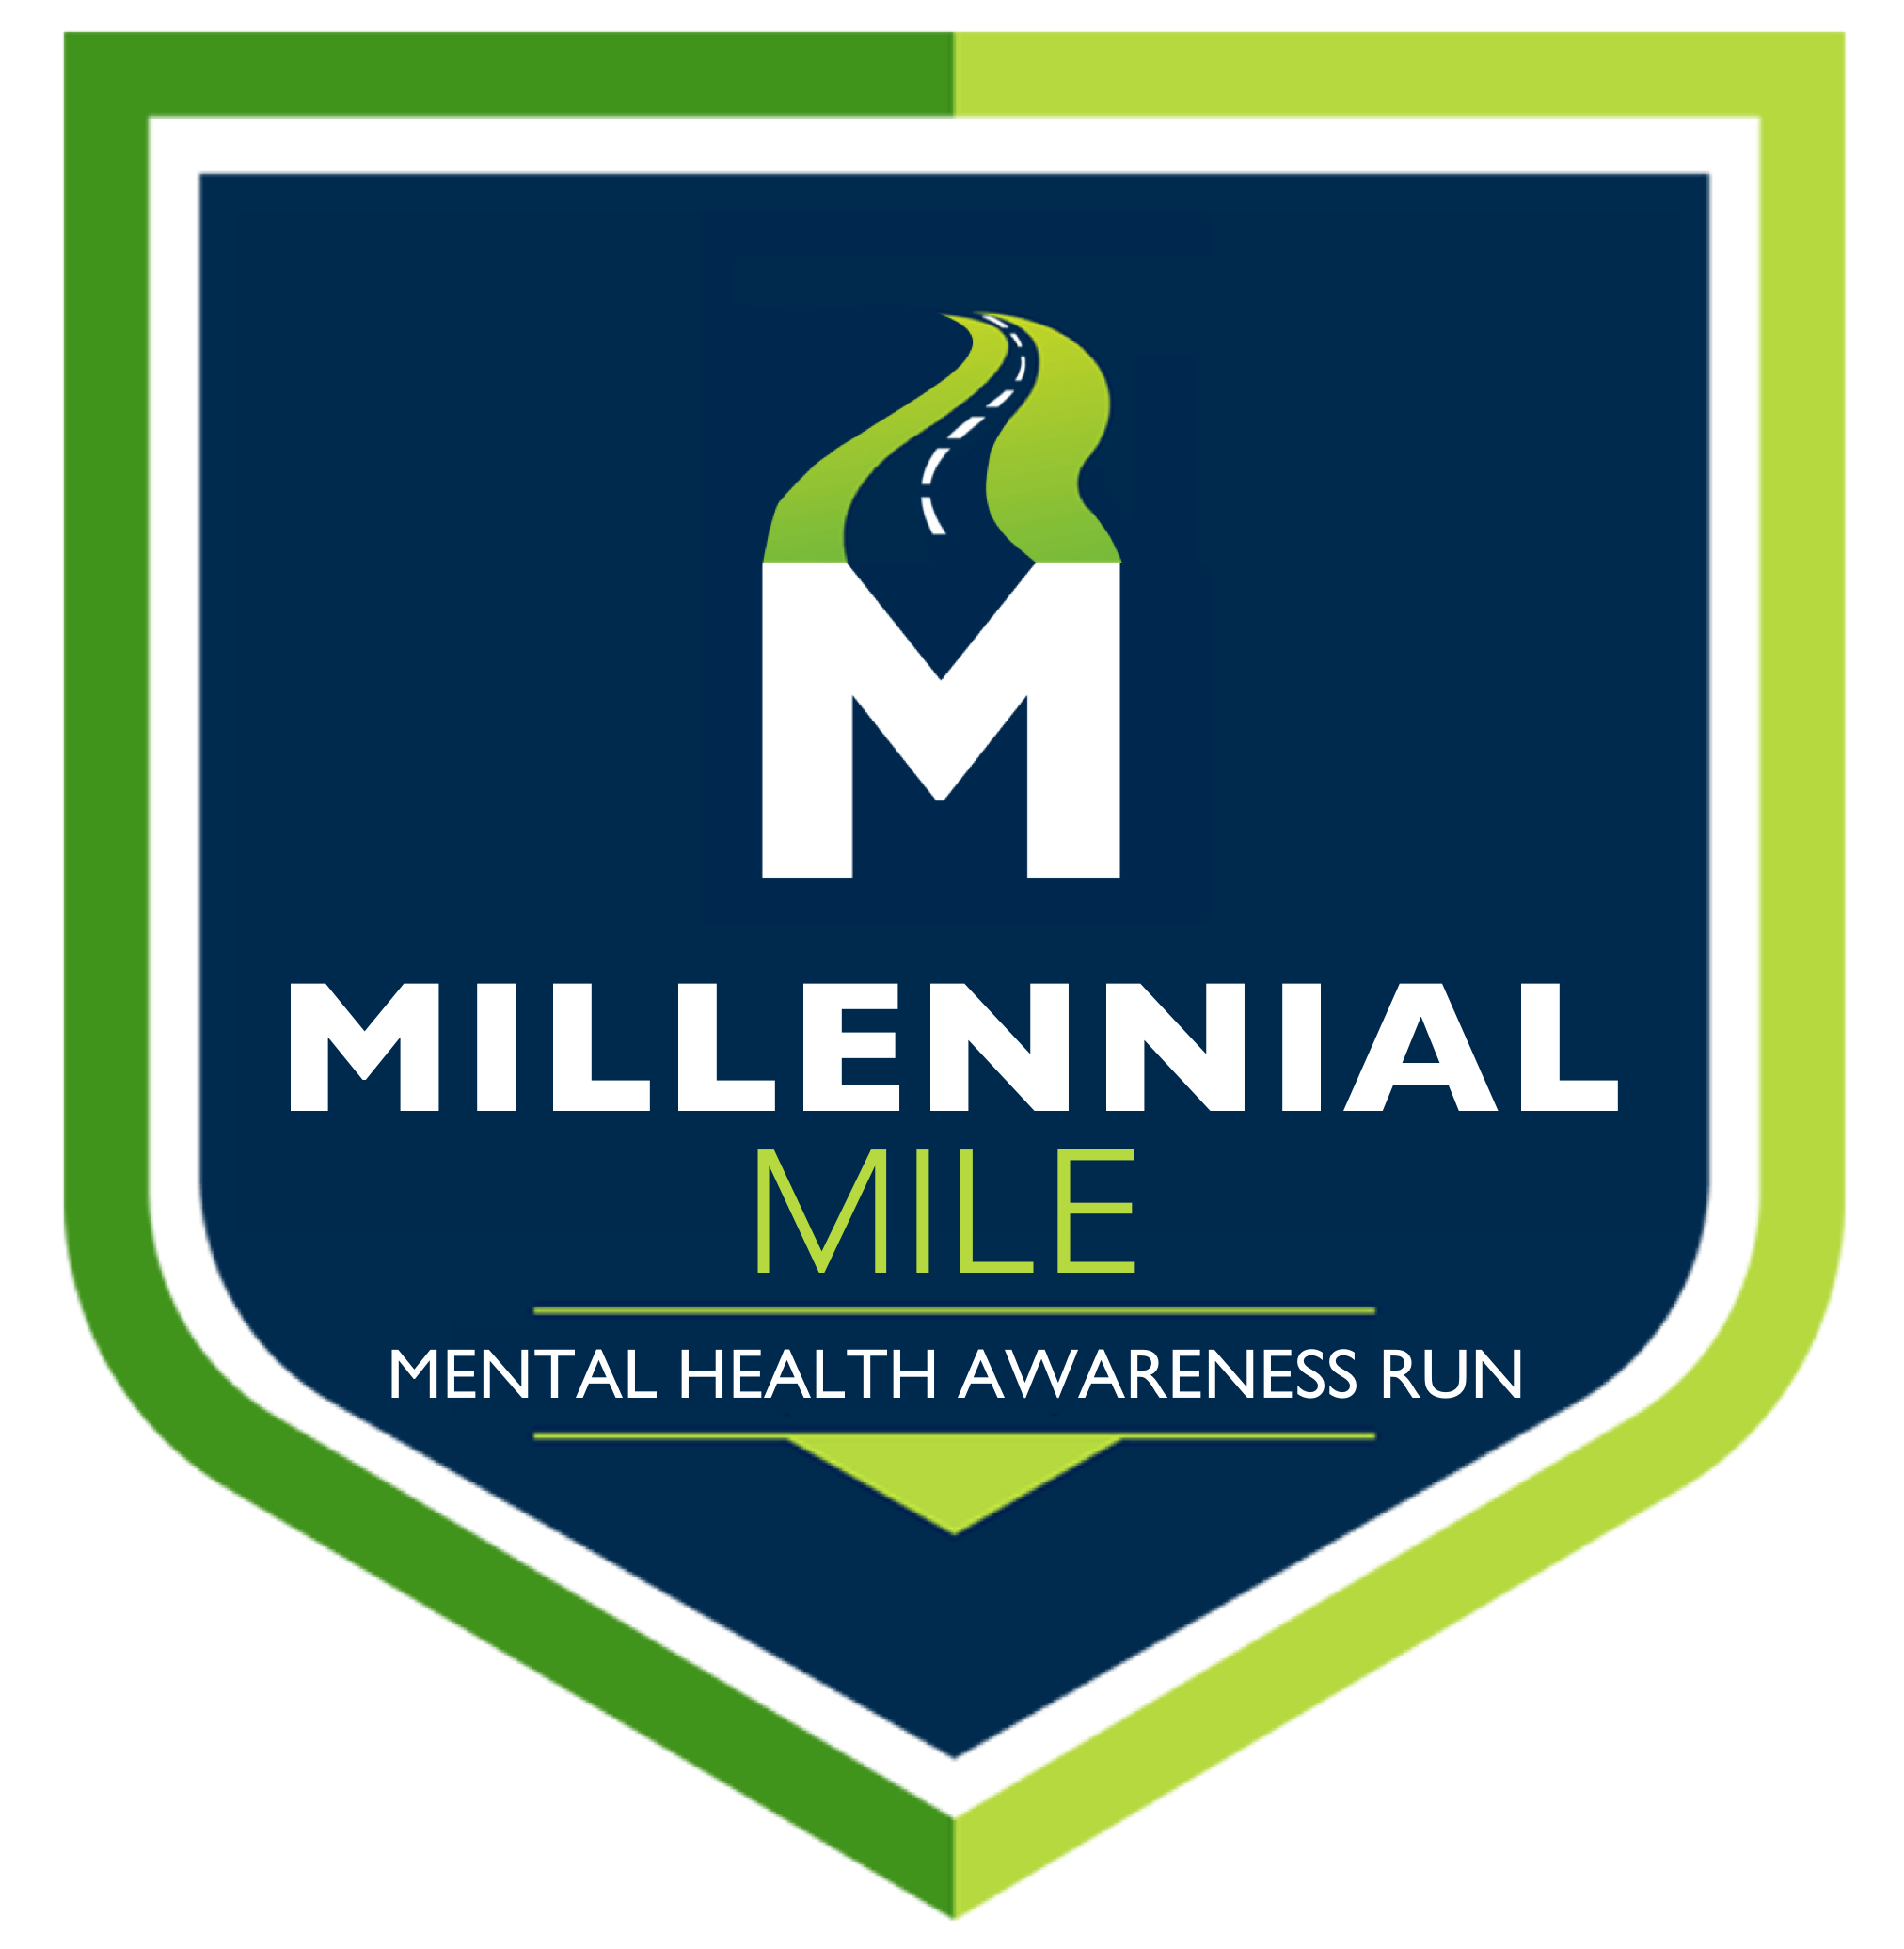 The Millennial Mile logo